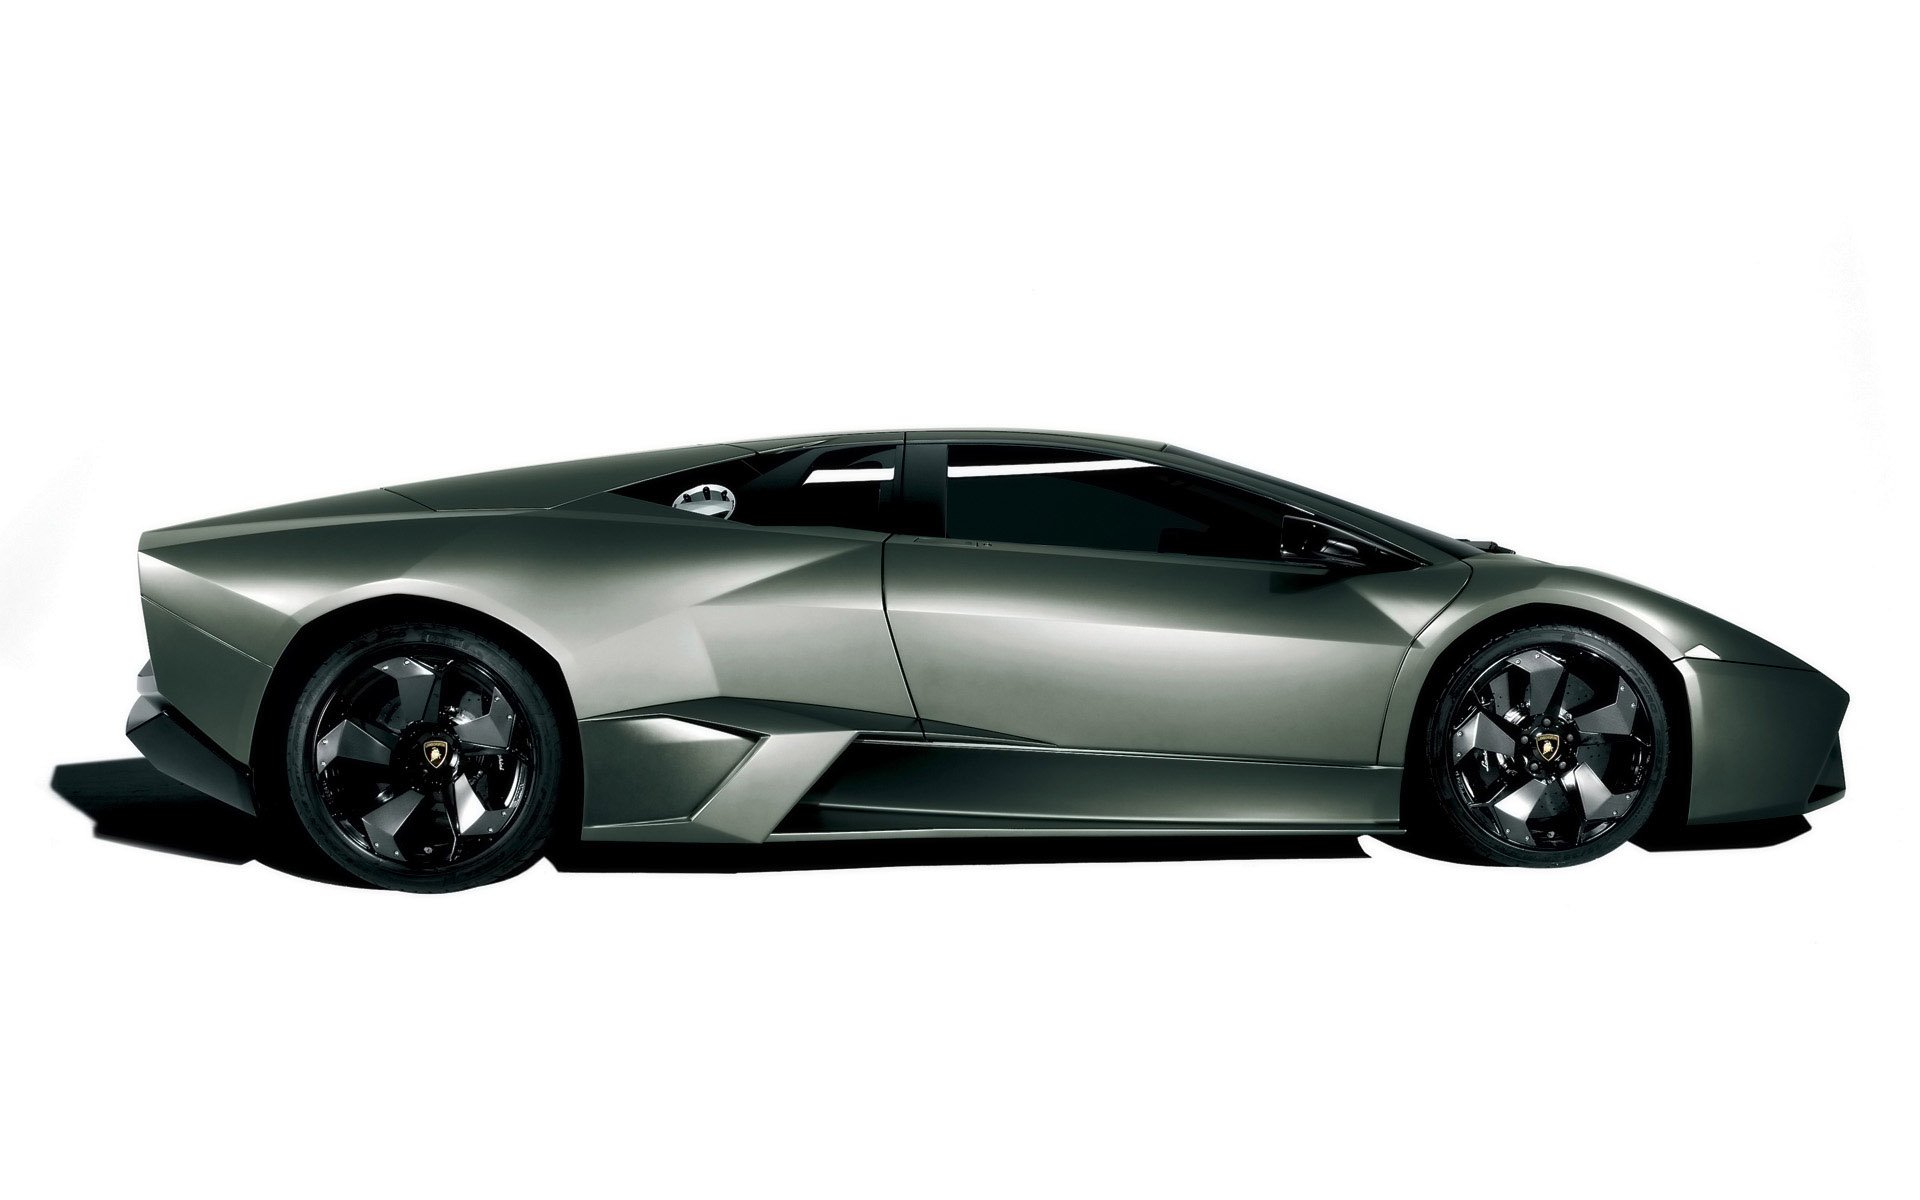 Lamborghini Reventon exterior - Side Profile